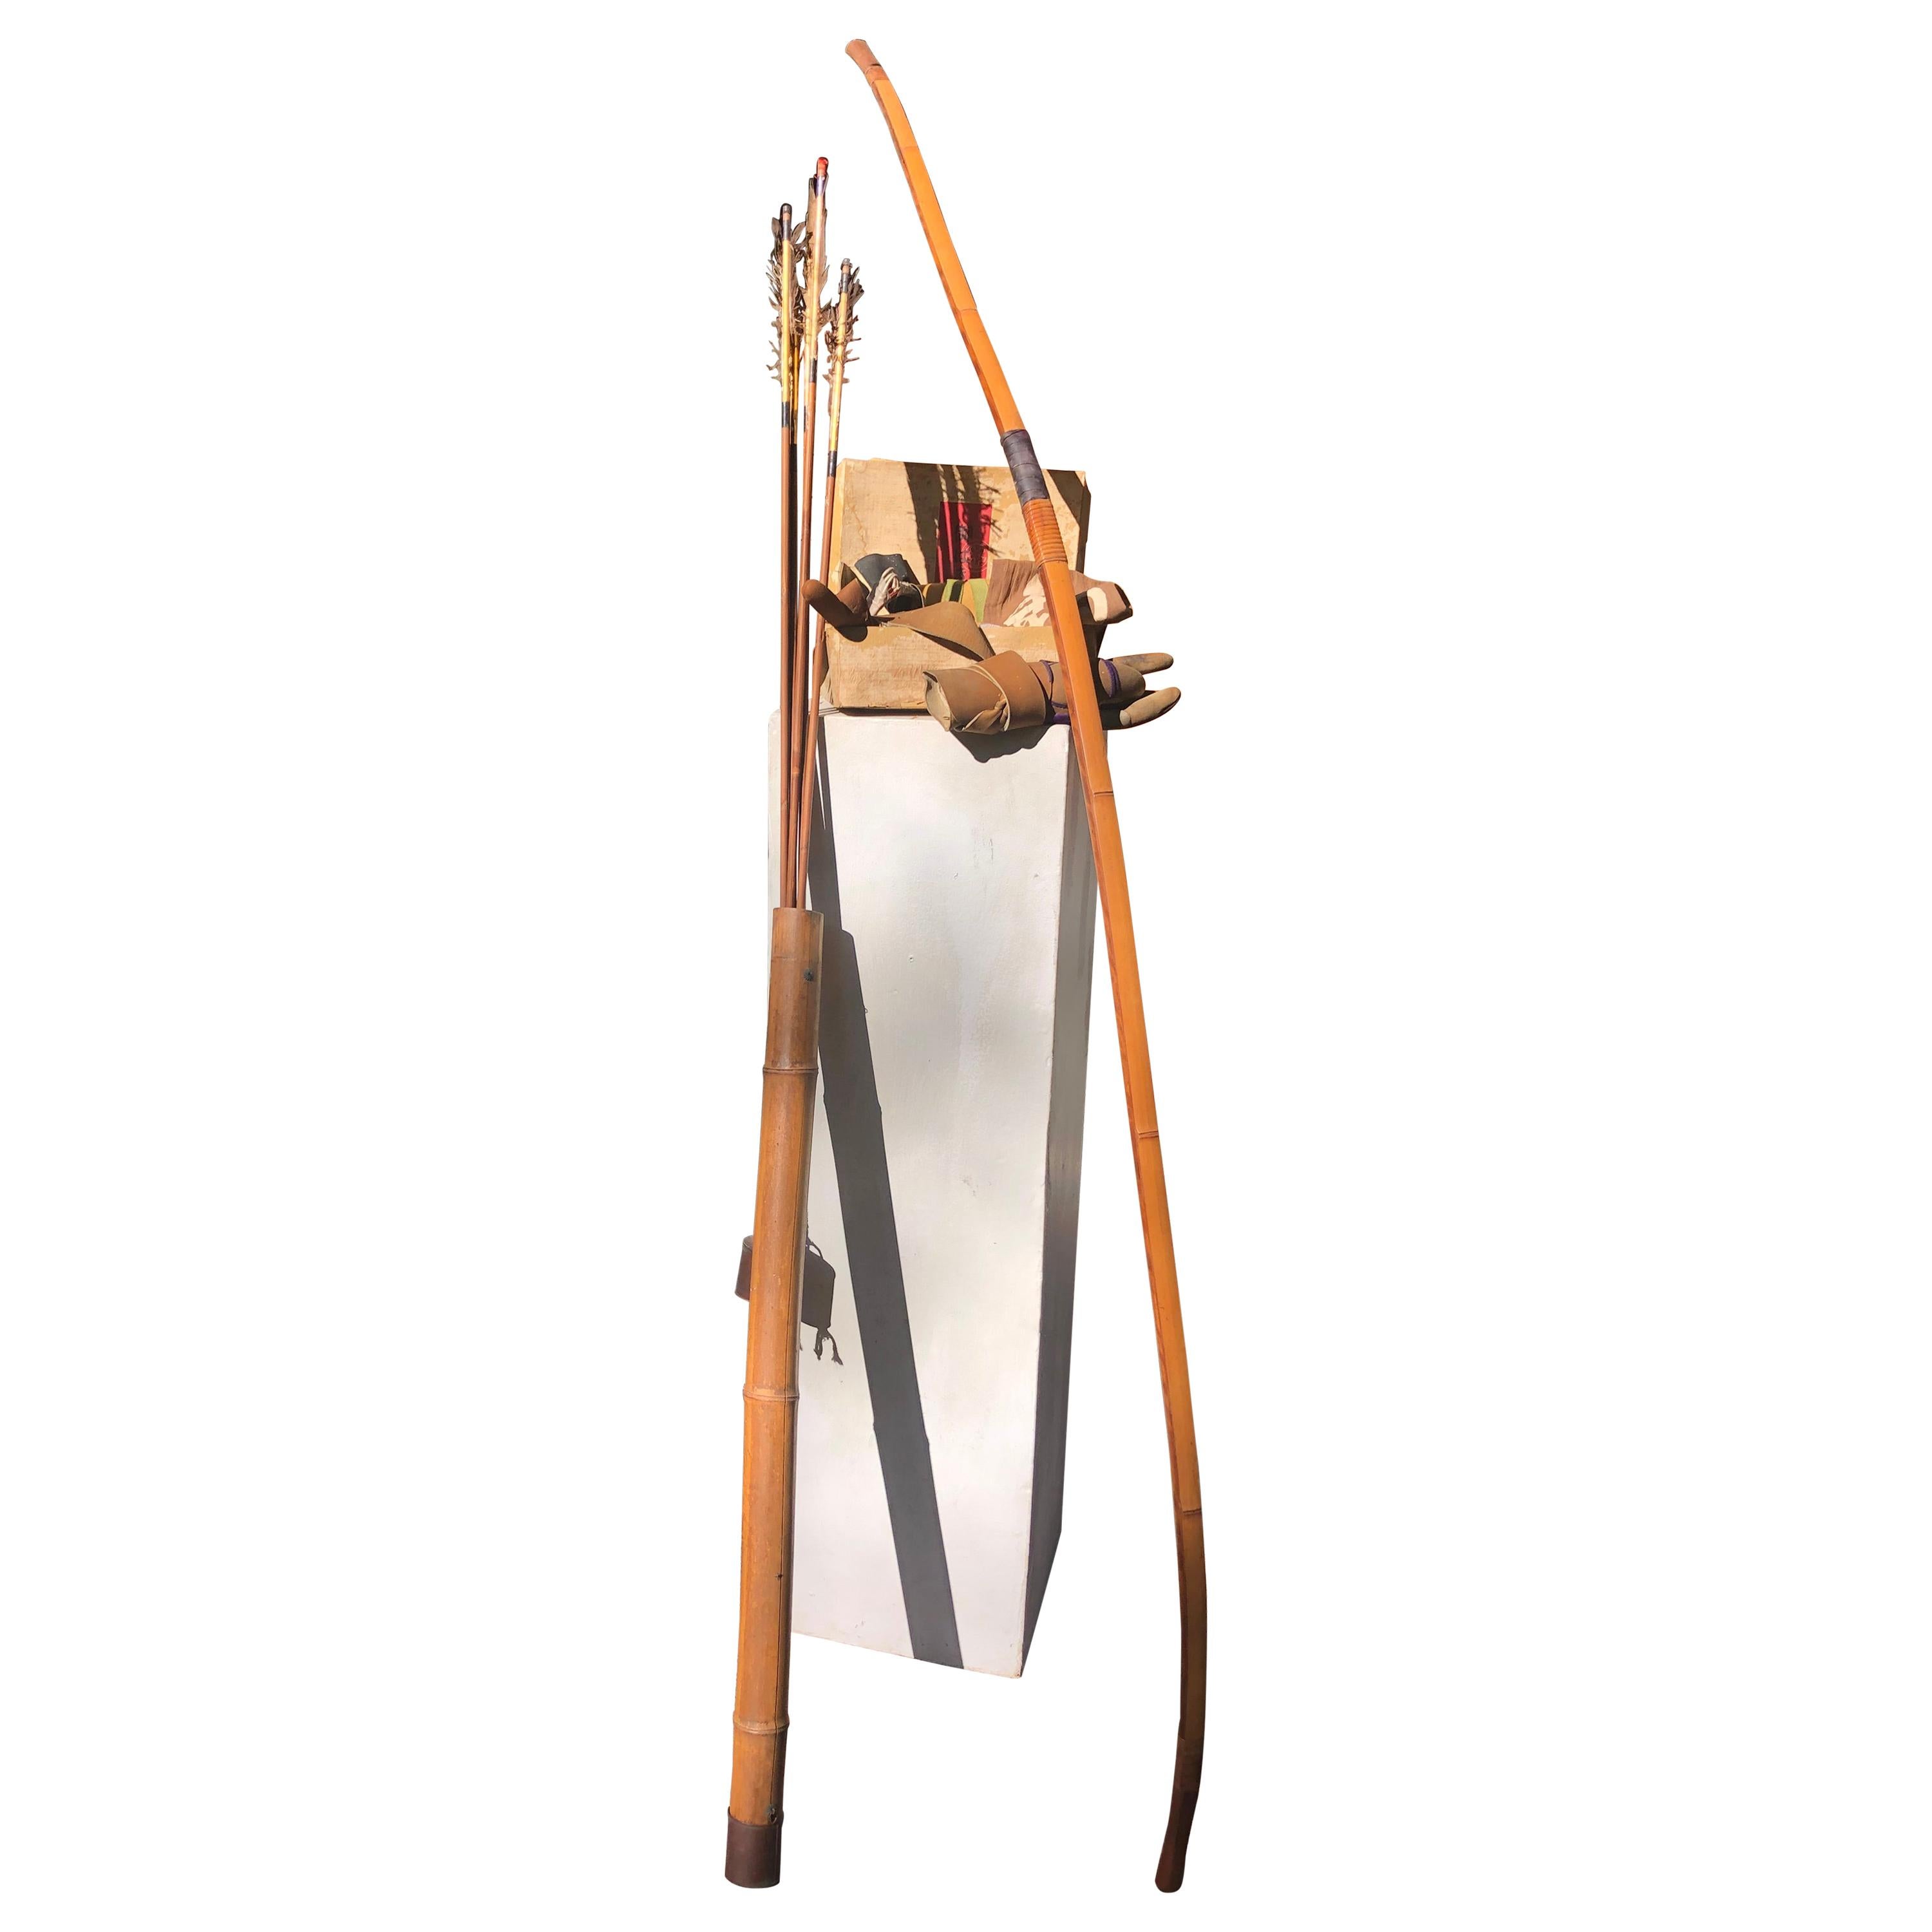 Japanese Antique Samurai Bow, Quiver, Arrows, Complete Boxed Set, Rare Find